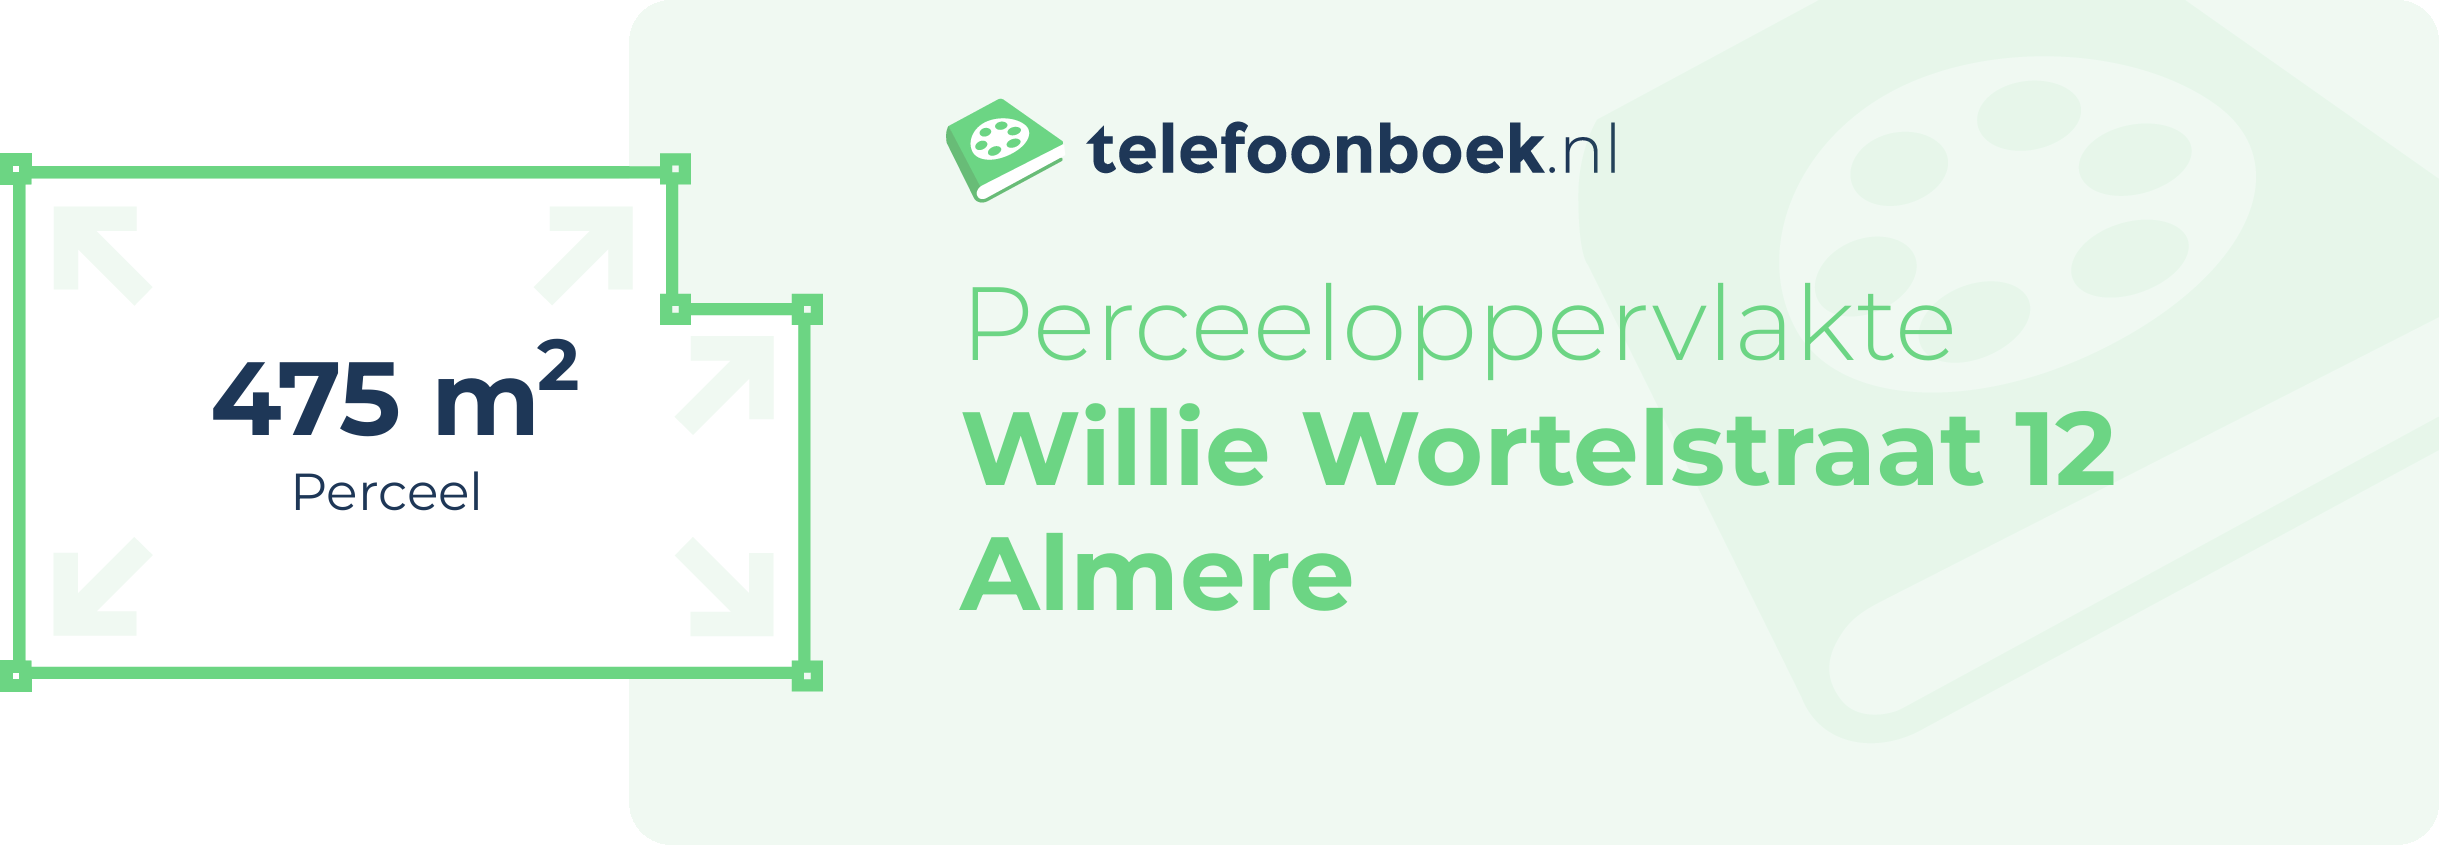 Perceeloppervlakte Willie Wortelstraat 12 Almere